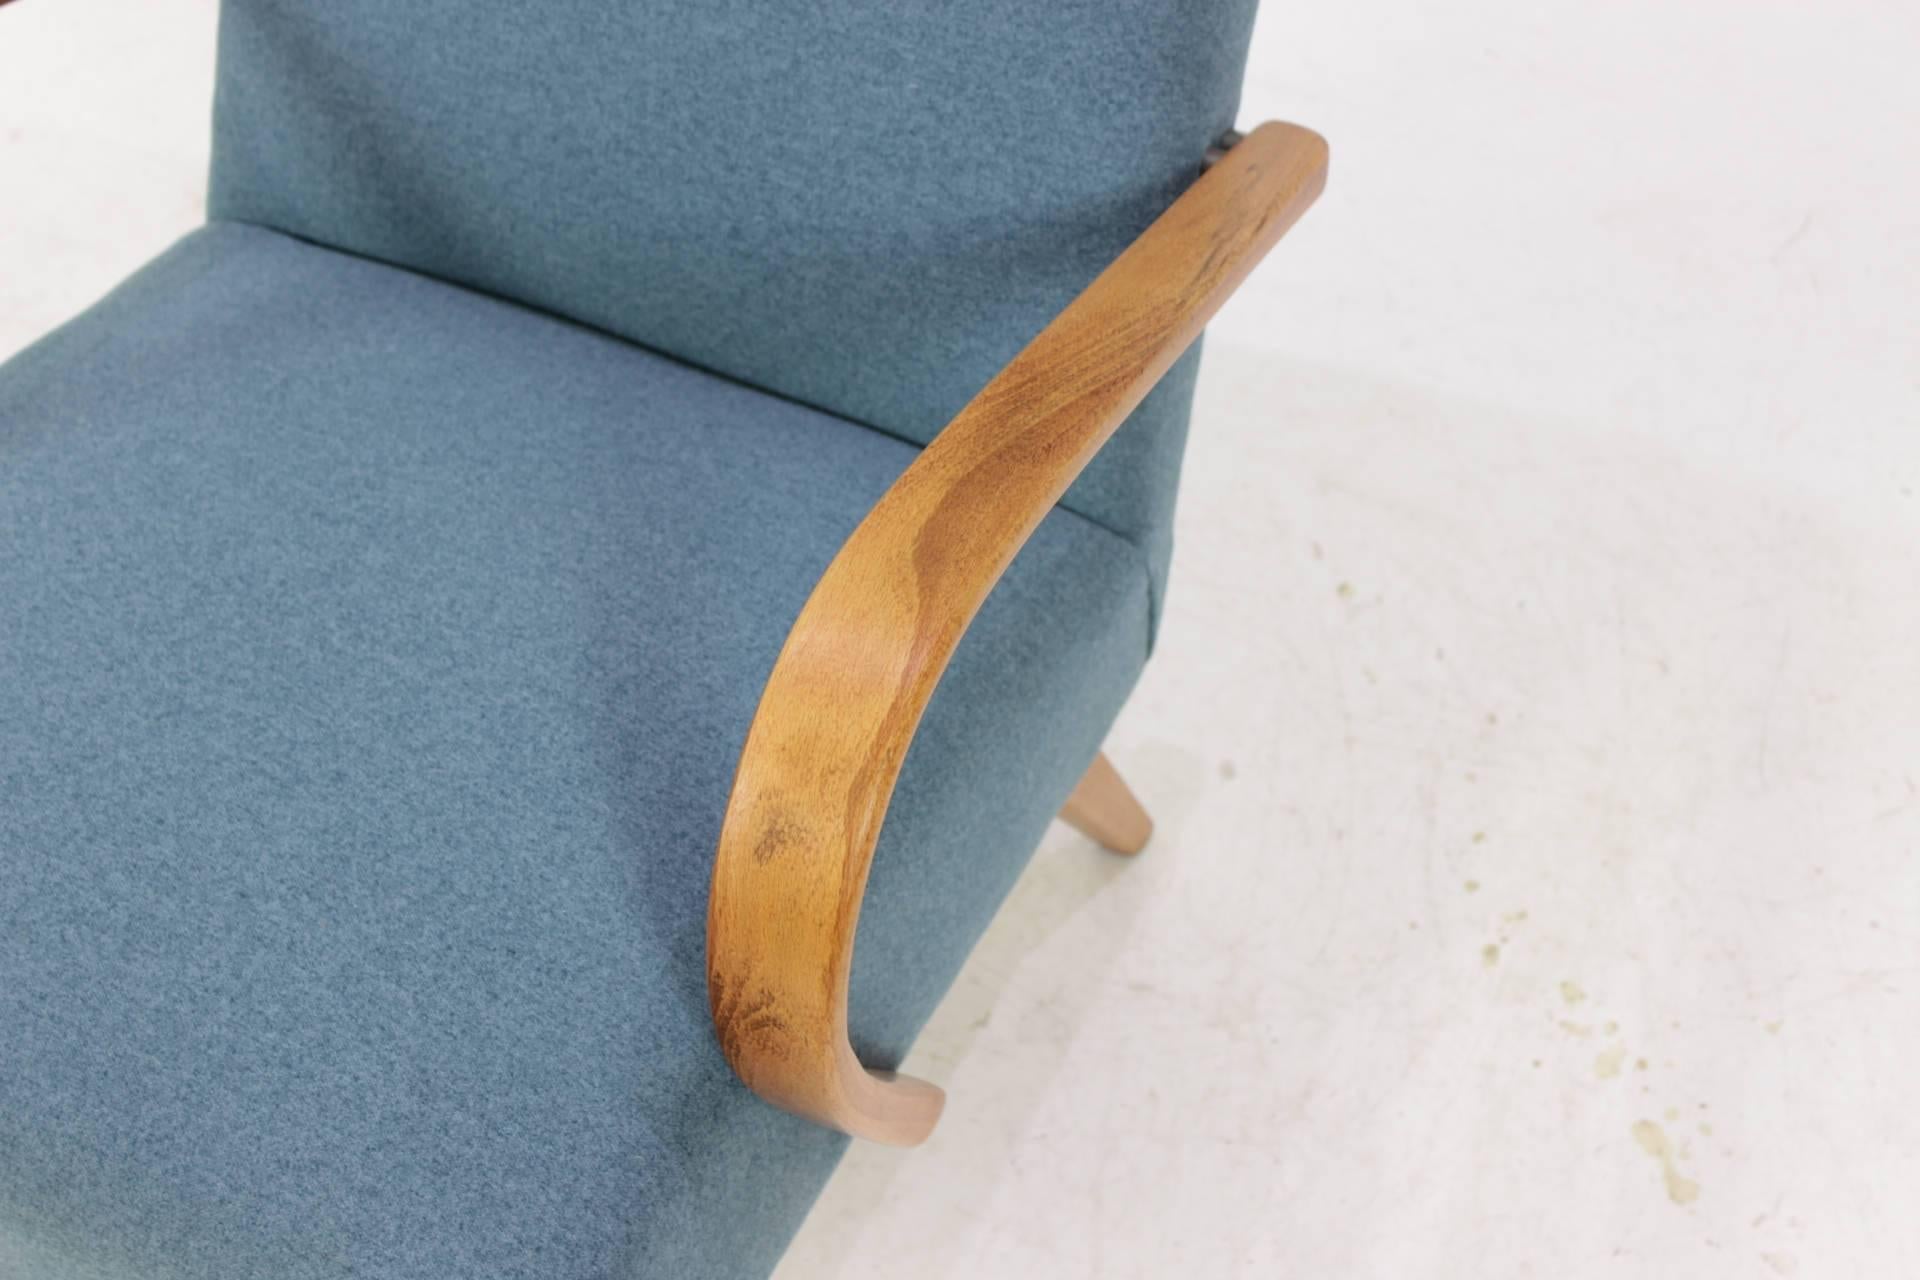 Mid-Century Modern 1960 Thon/Thonet Bentwood Lounge Chair